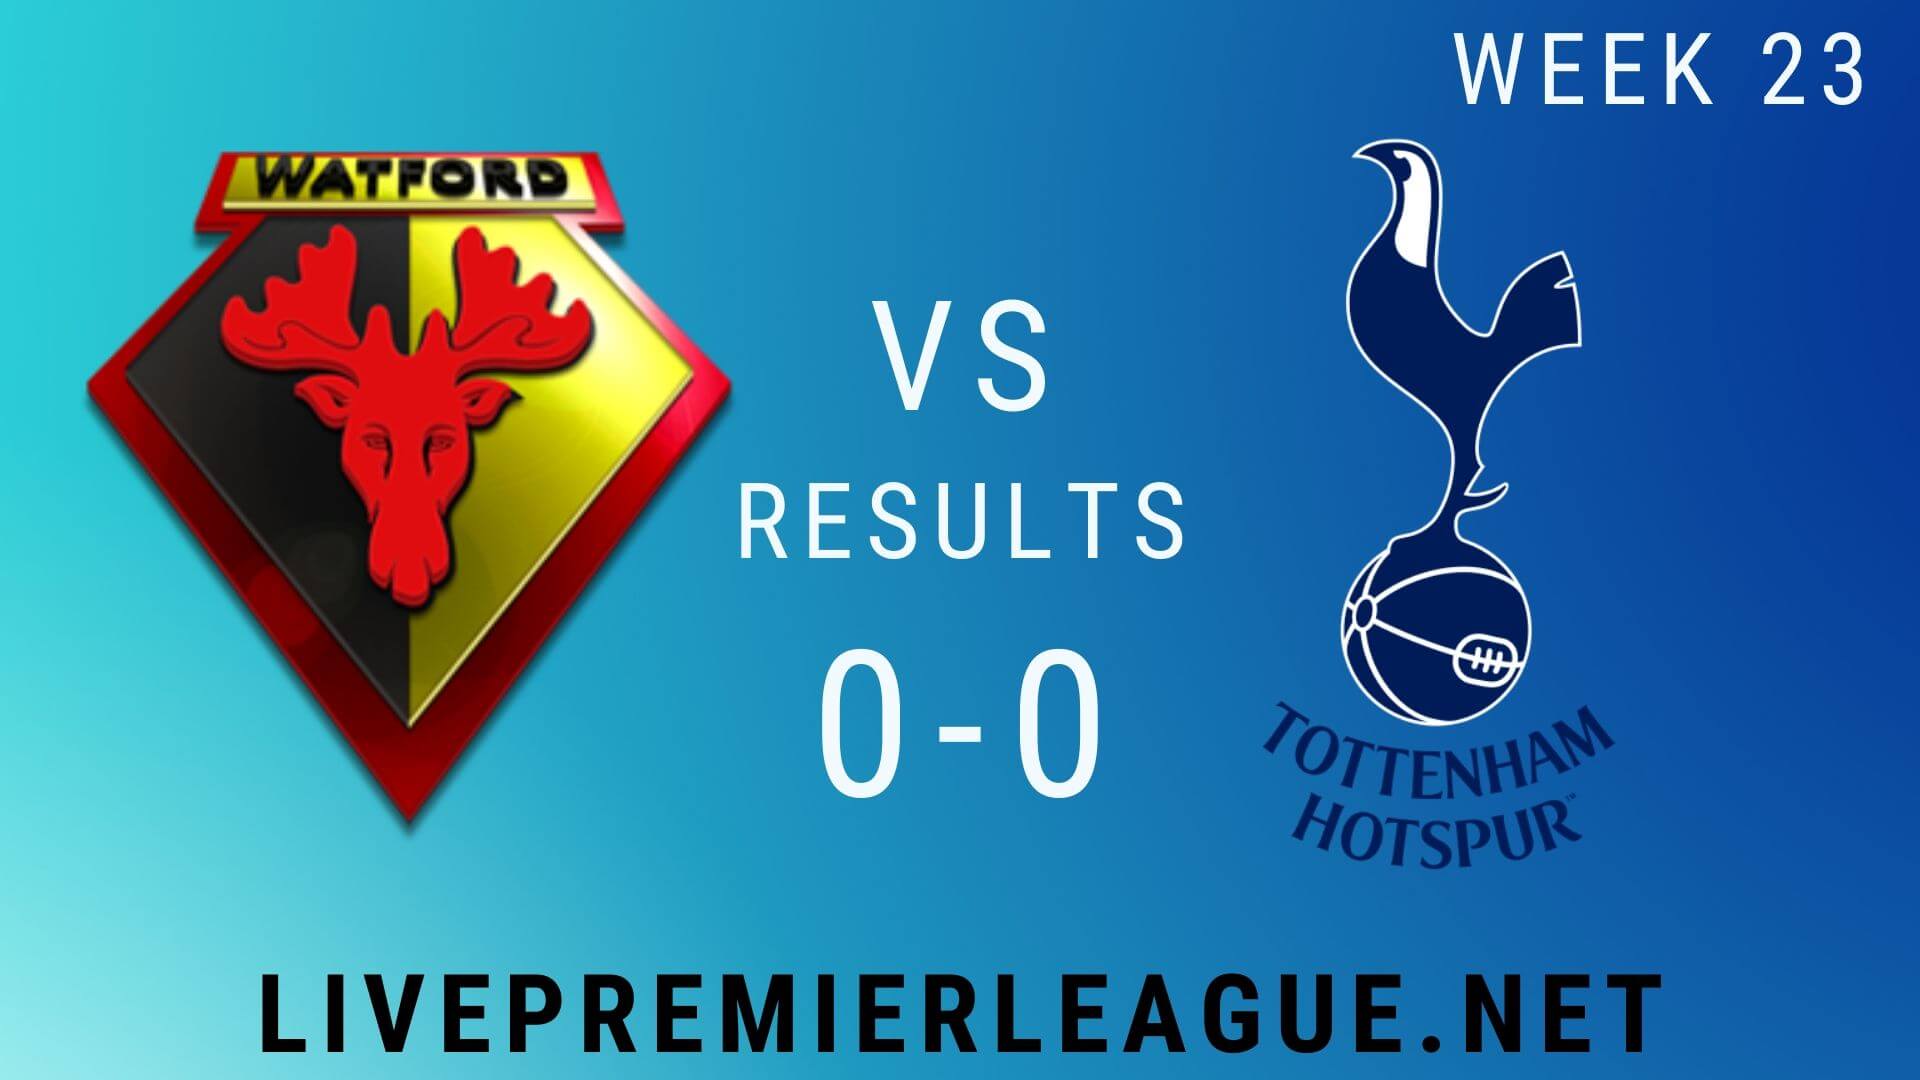 Watford Vs Tottenham Hotspur | Week 23 Result 2020